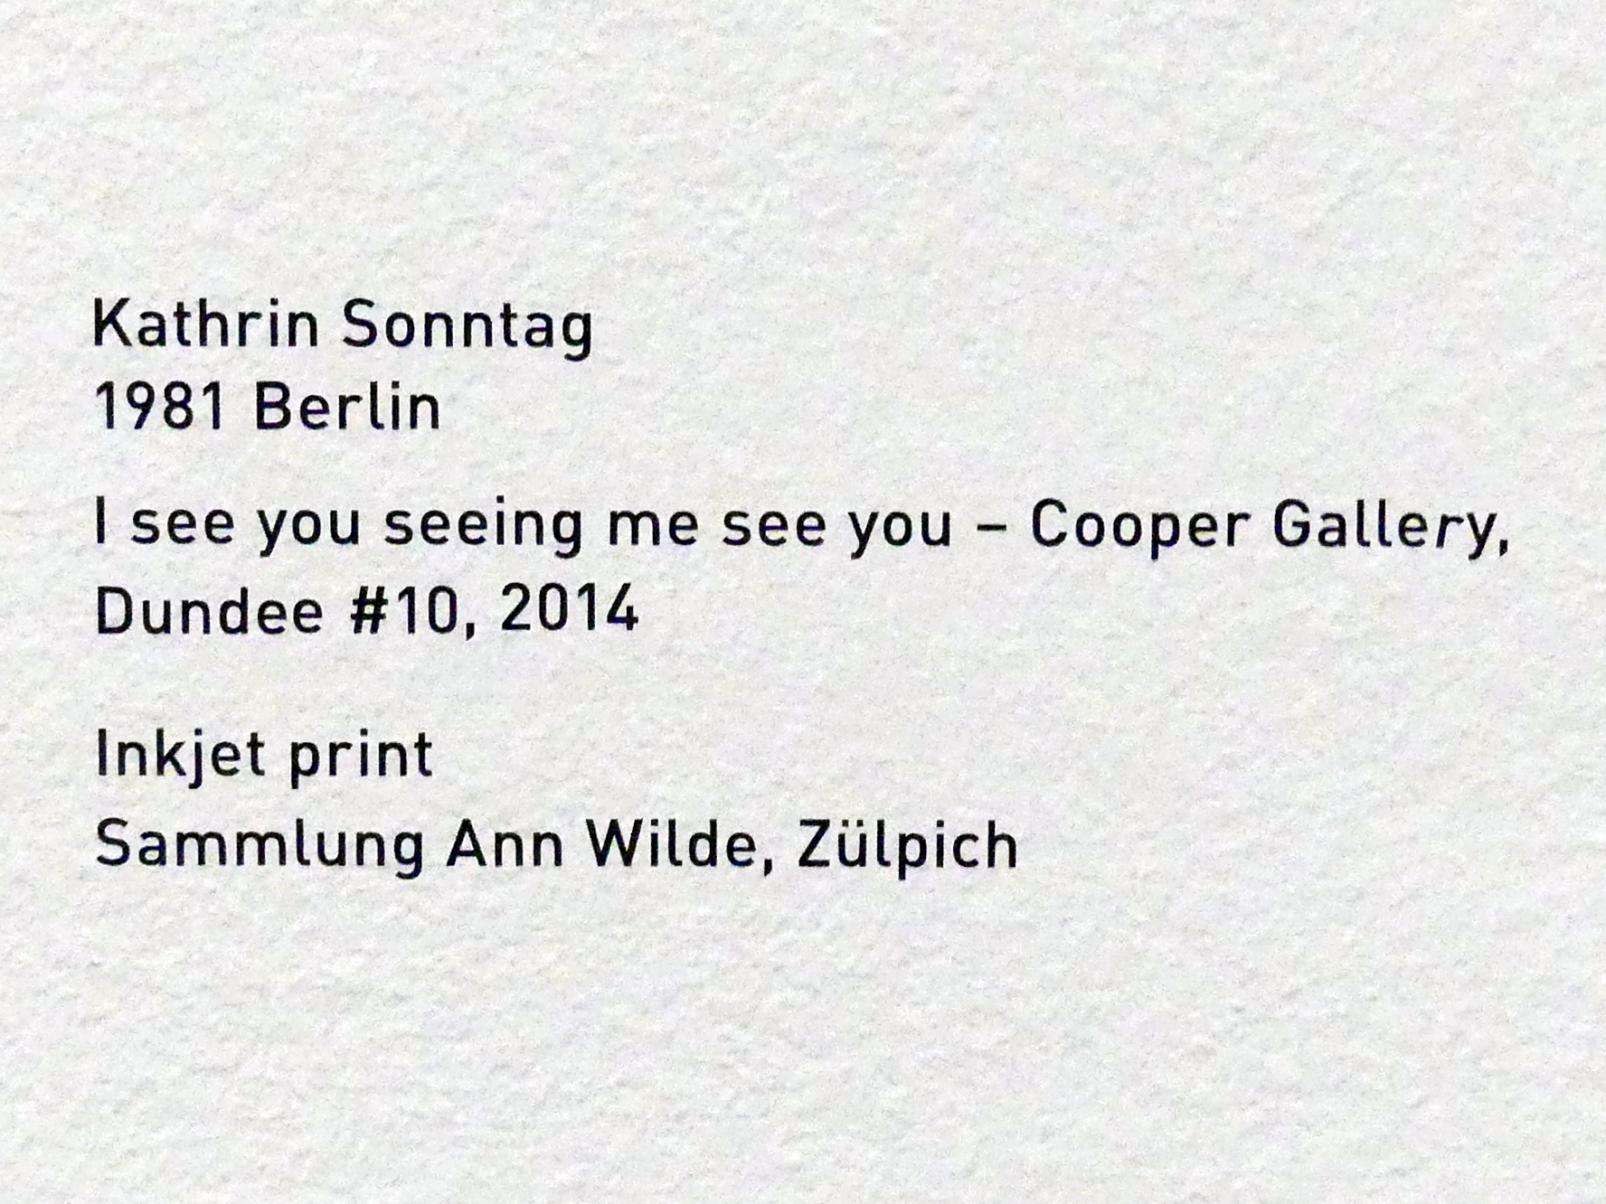 Kathrin Sonntag (2014), I see you seeing me see you - Cooper Gallery Dundee #10, München, Pinakothek der Moderne, Saal 8, 2014, Bild 2/2